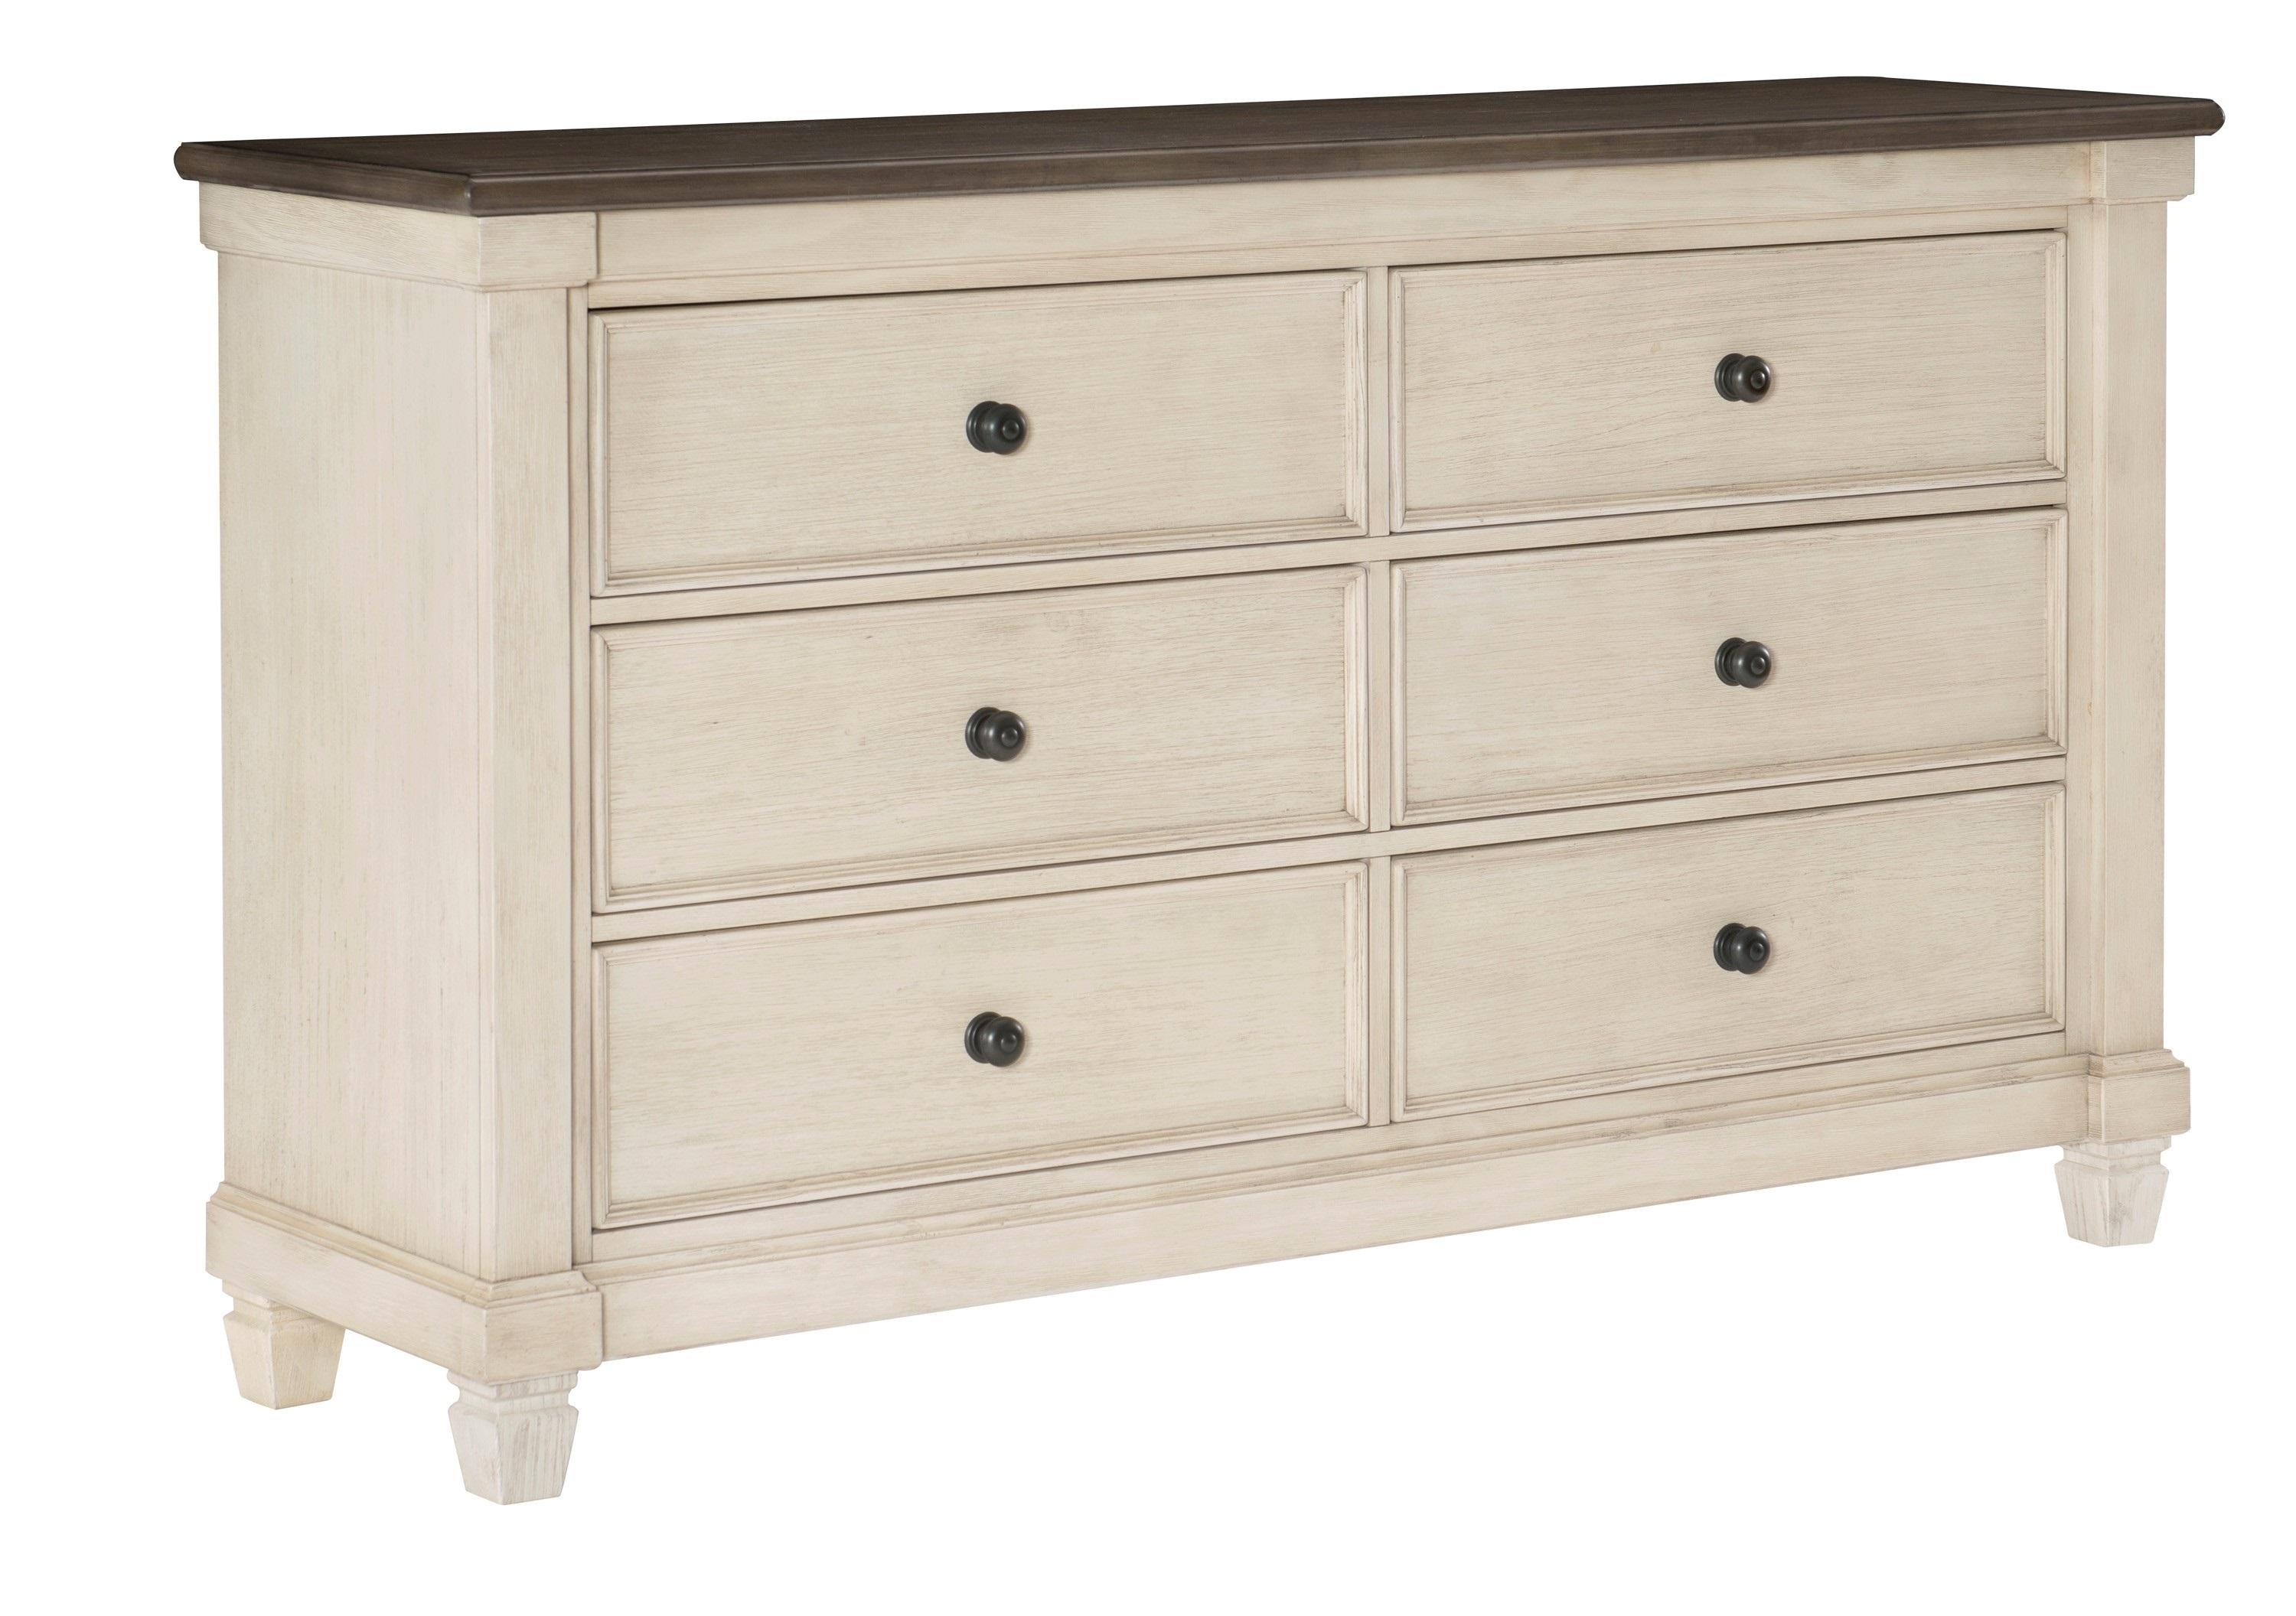 Transitional Dresser 1626-5 Weaver 1626-5 in Antique White, Brown 